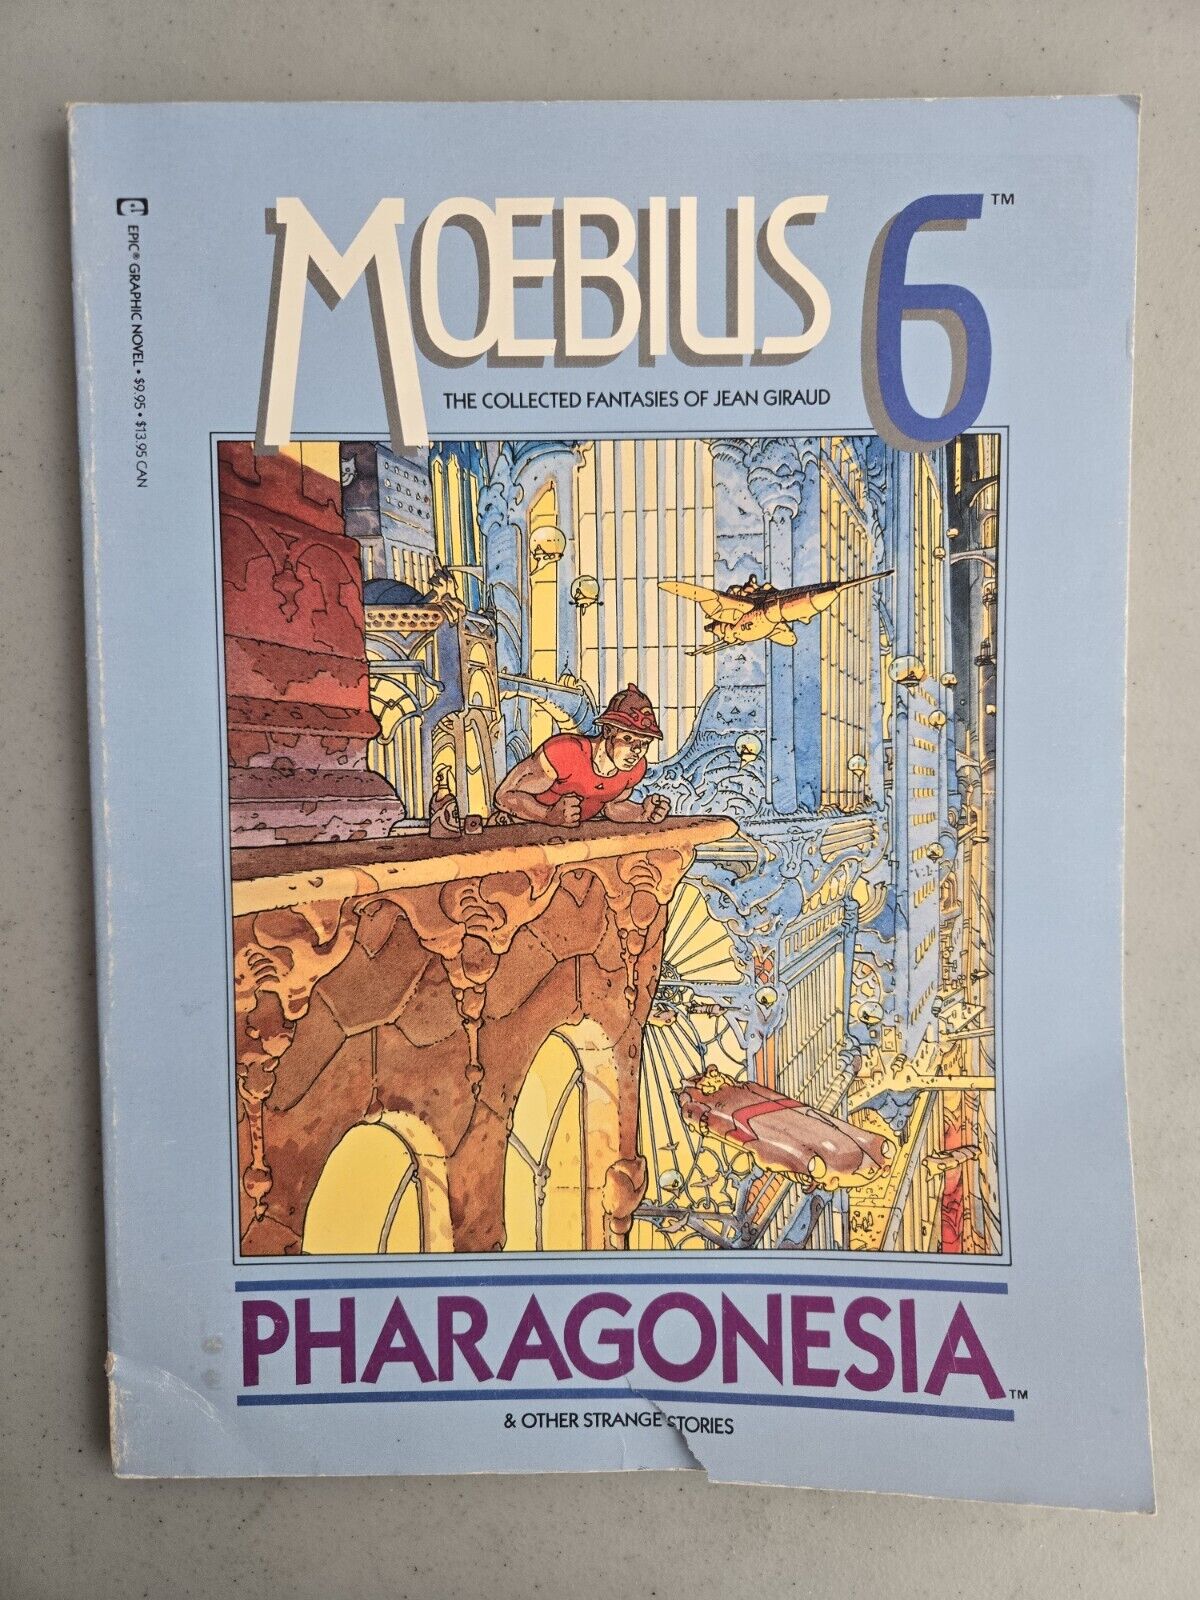 Pharagonesia - Moebius - Jean Giraud Graphic Novel Epic Comics #6 1988